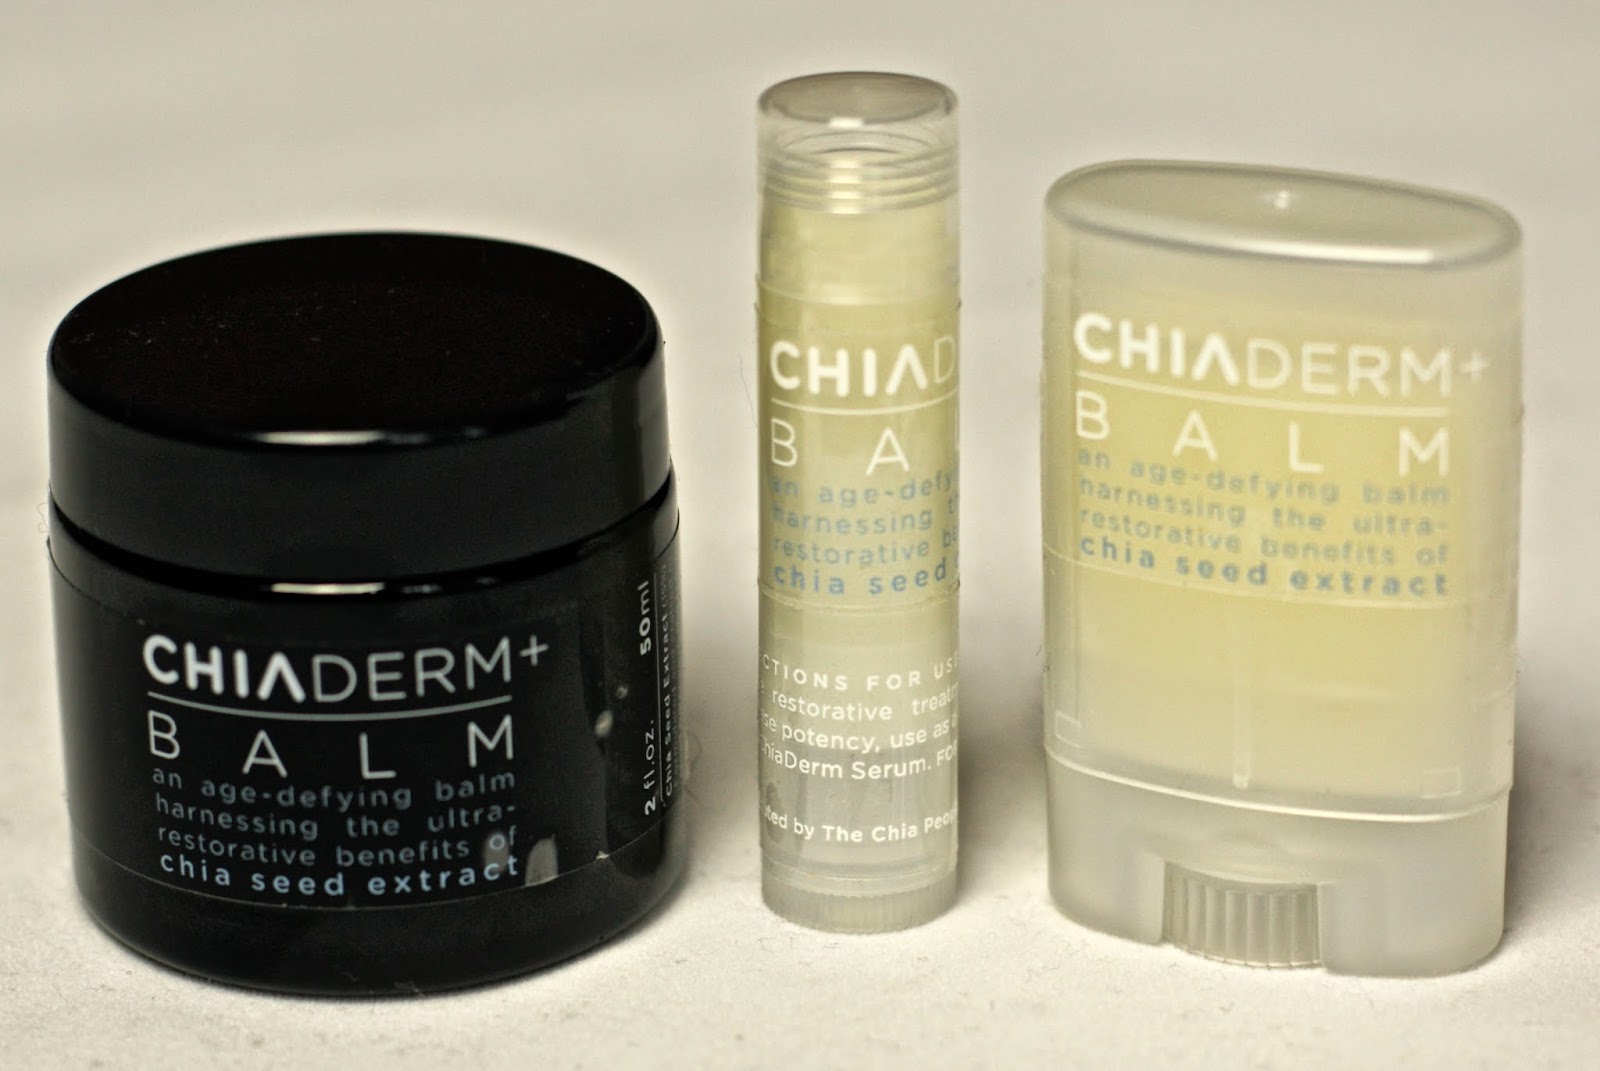 Lips balm set by ChiaDerm+